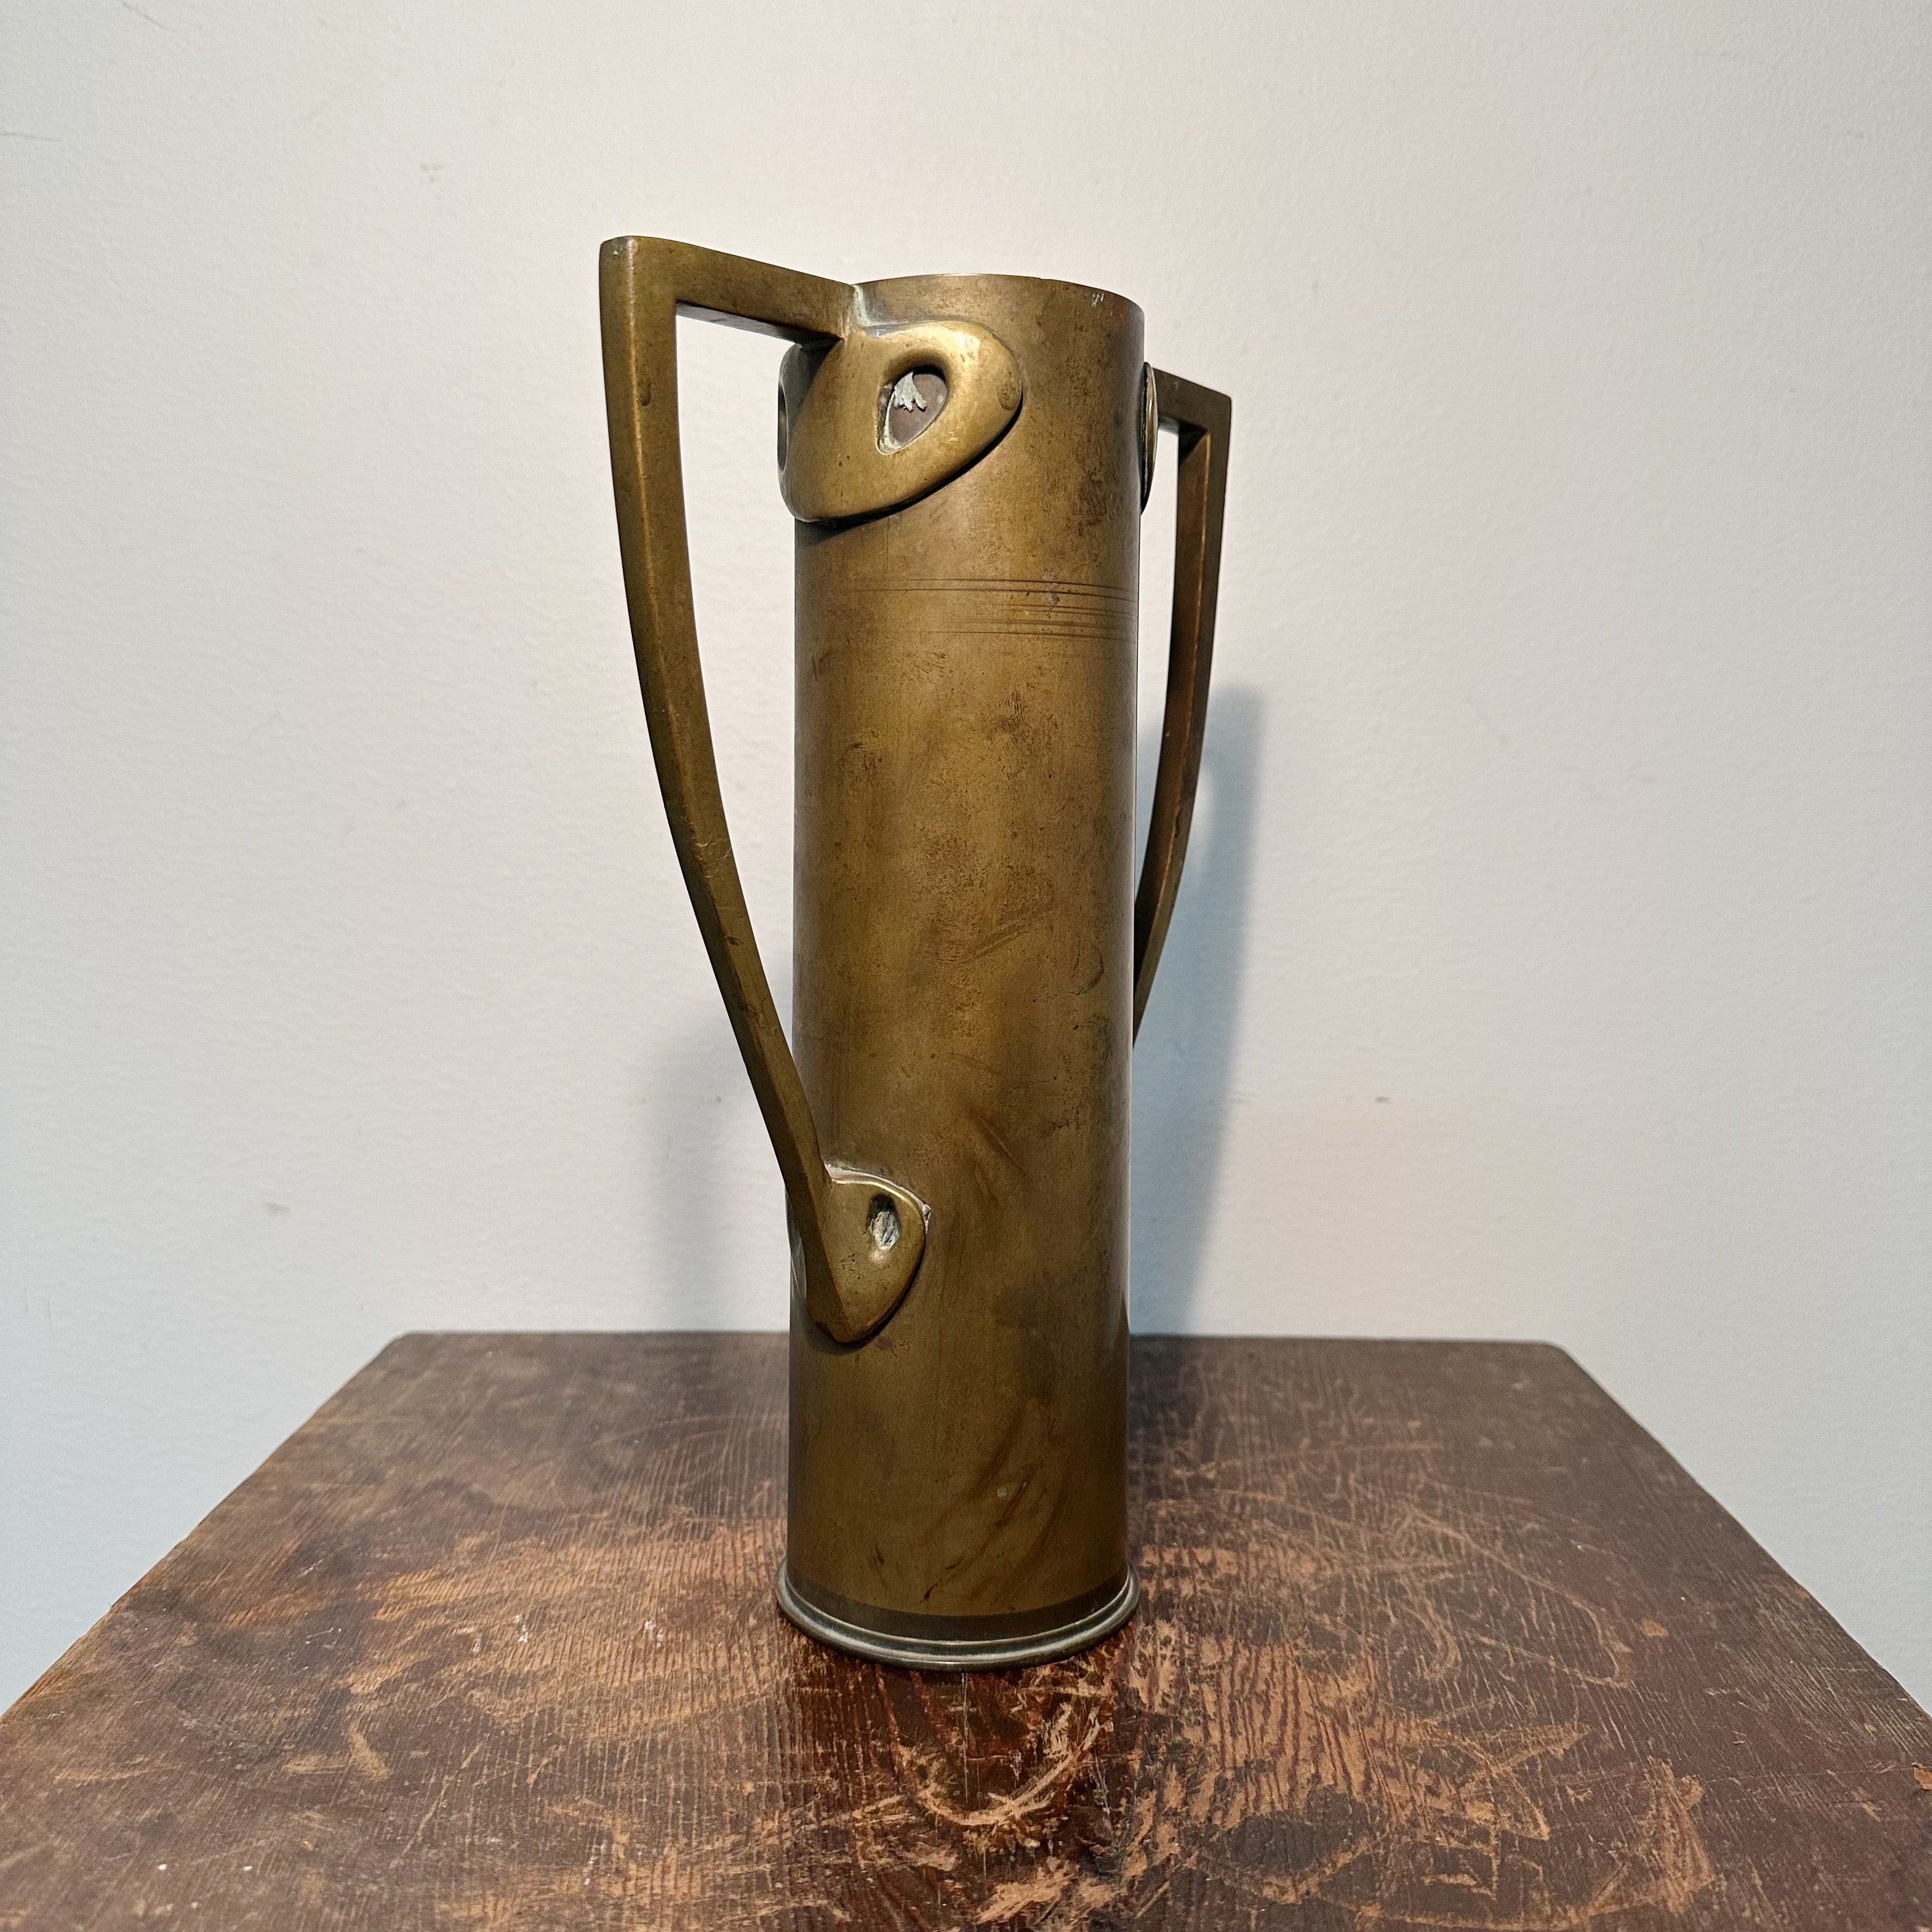 RAre WWII Trench Art Vase with Unique Handles - Antique Militaria Folk Art Sculpture - 11 1/2" x 3" x 7 1/2" - Rare 1940s Unusual War Artwork